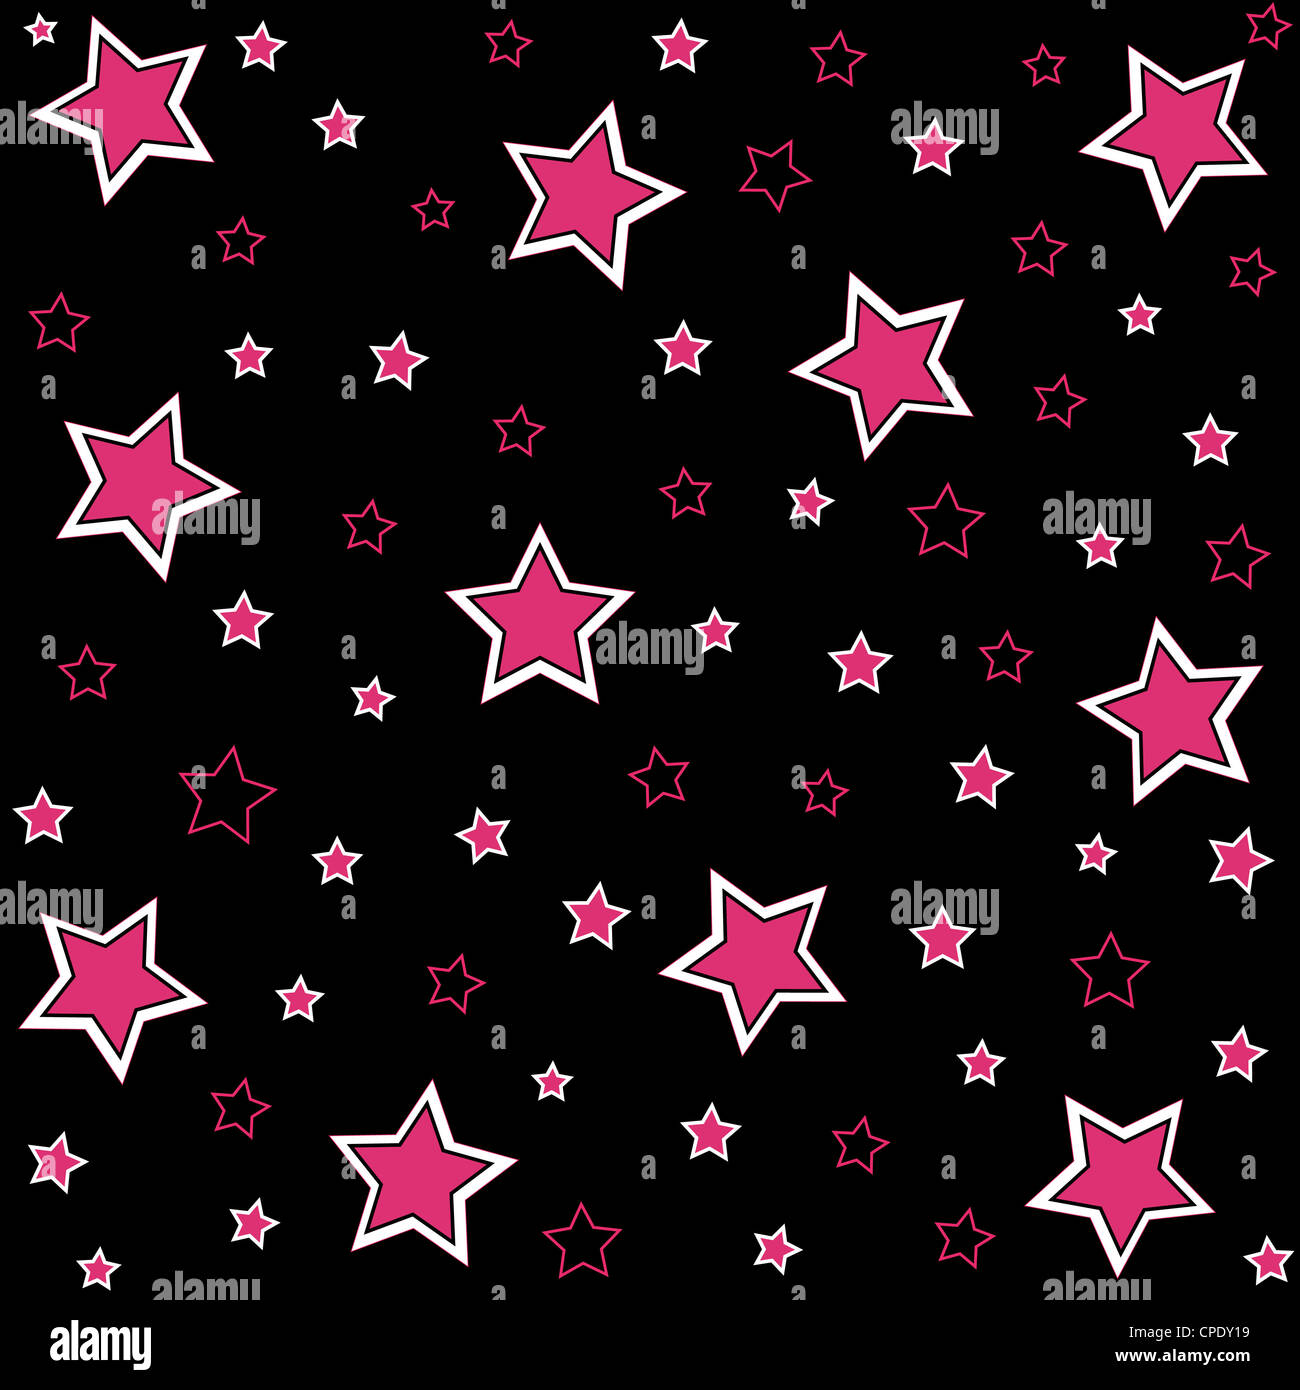 Celebration pink stars on black background Stock Photo